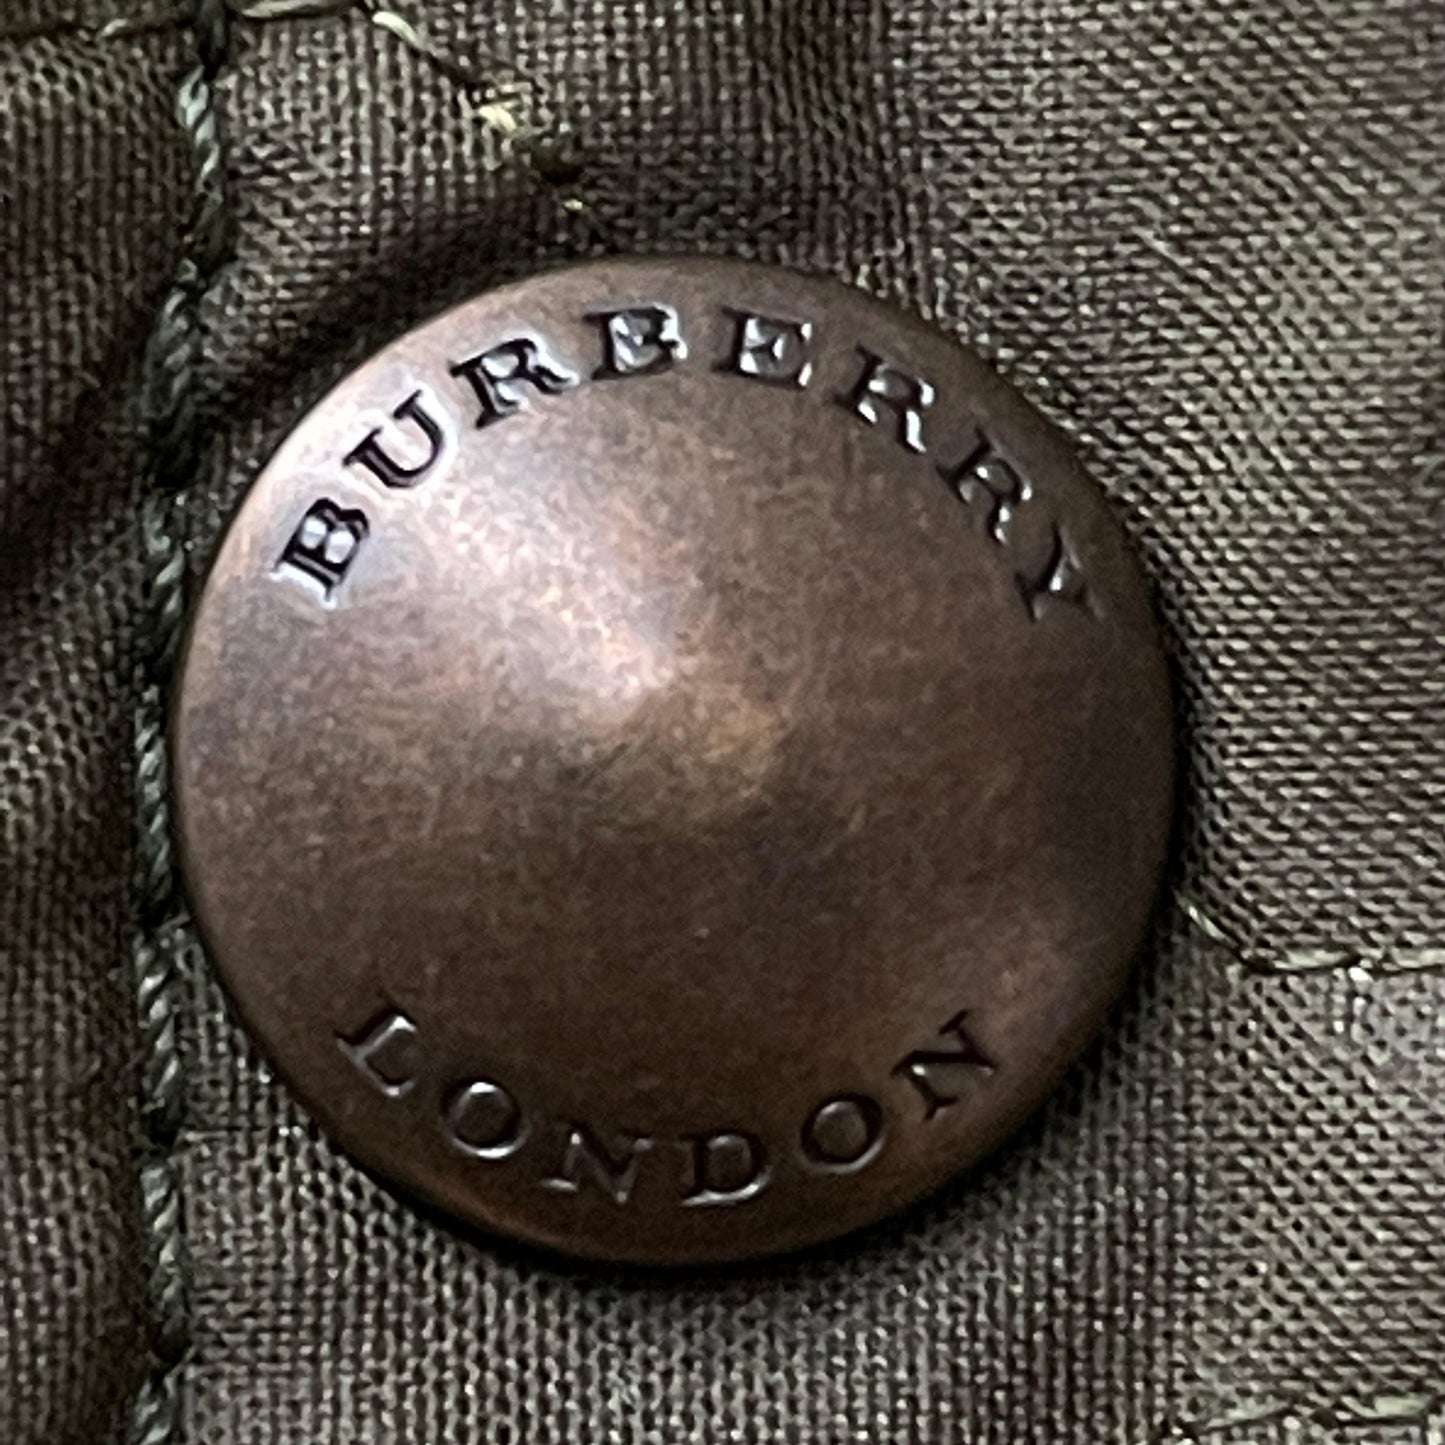 Burberry London military jacket Burberry London oiled jacket